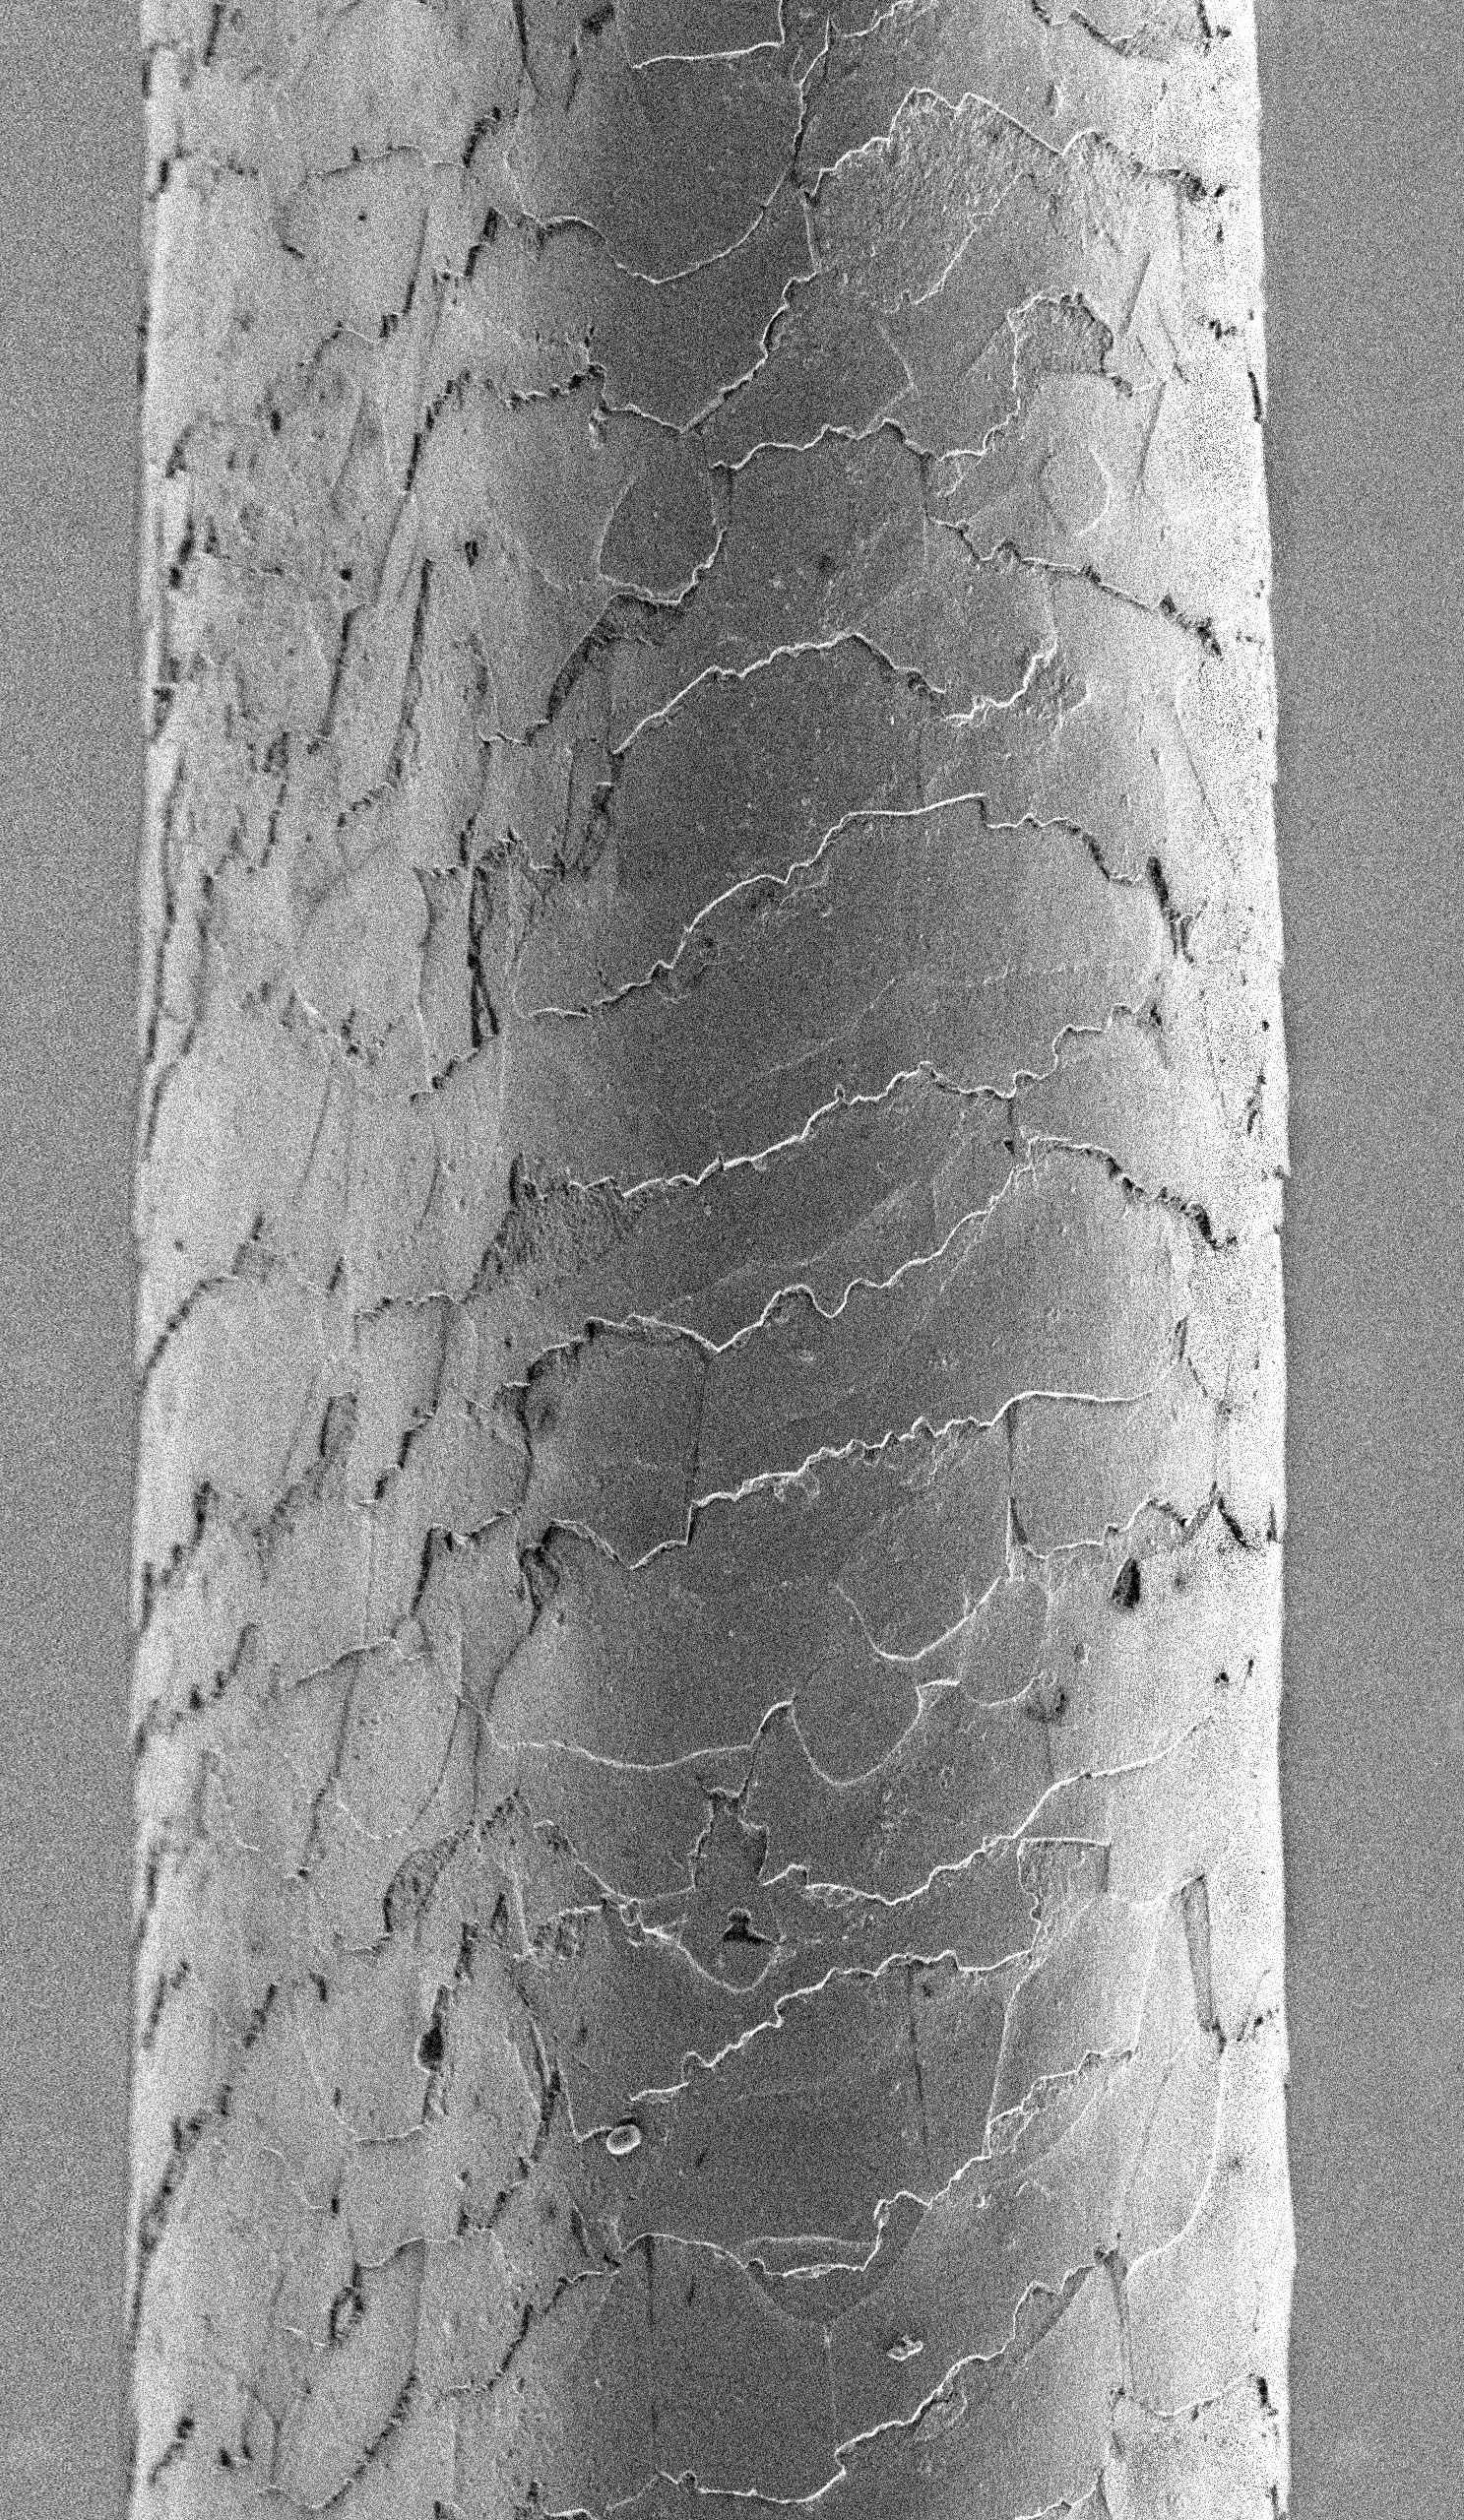 human hair under a microscope